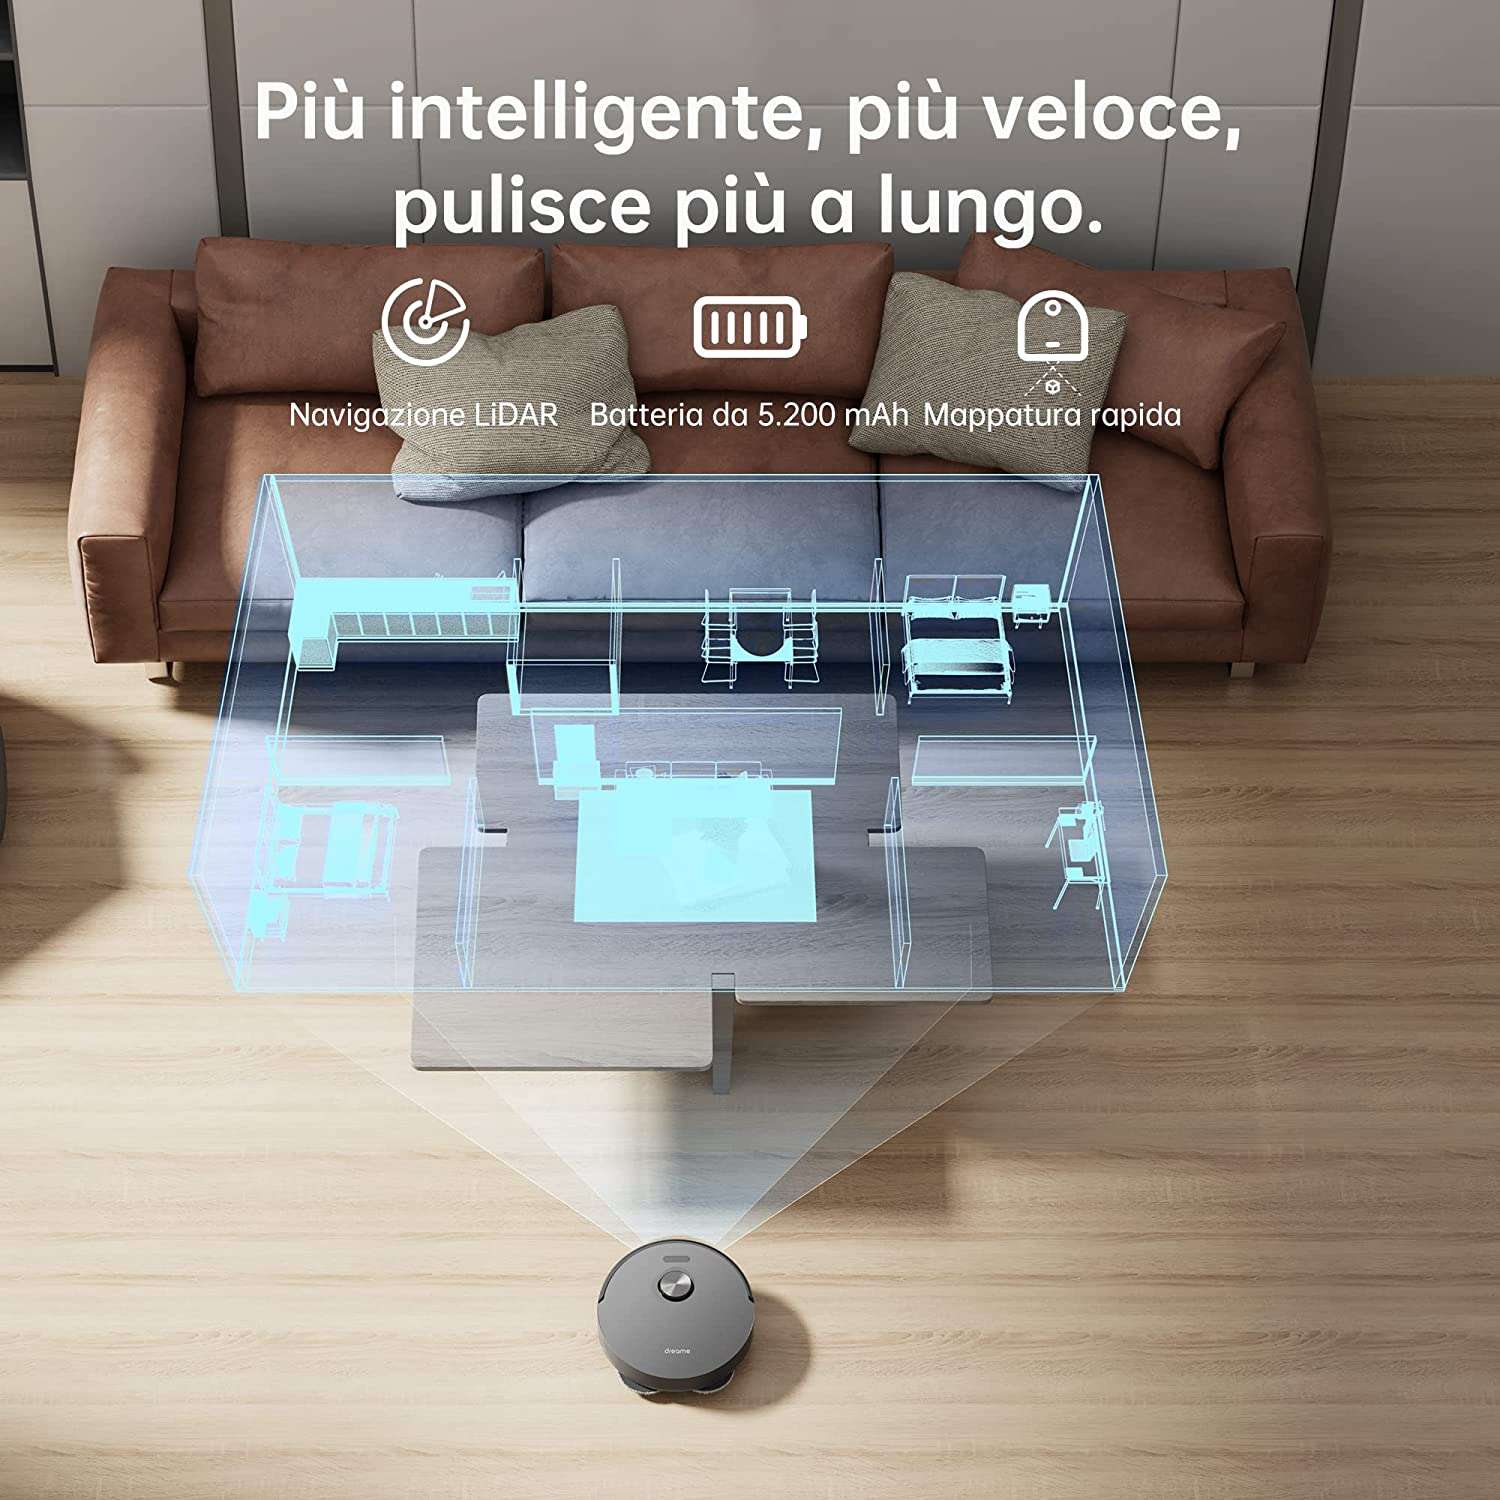 dreame-l10s-pro-robot-2-in-1-pavimenti-splendenti-app